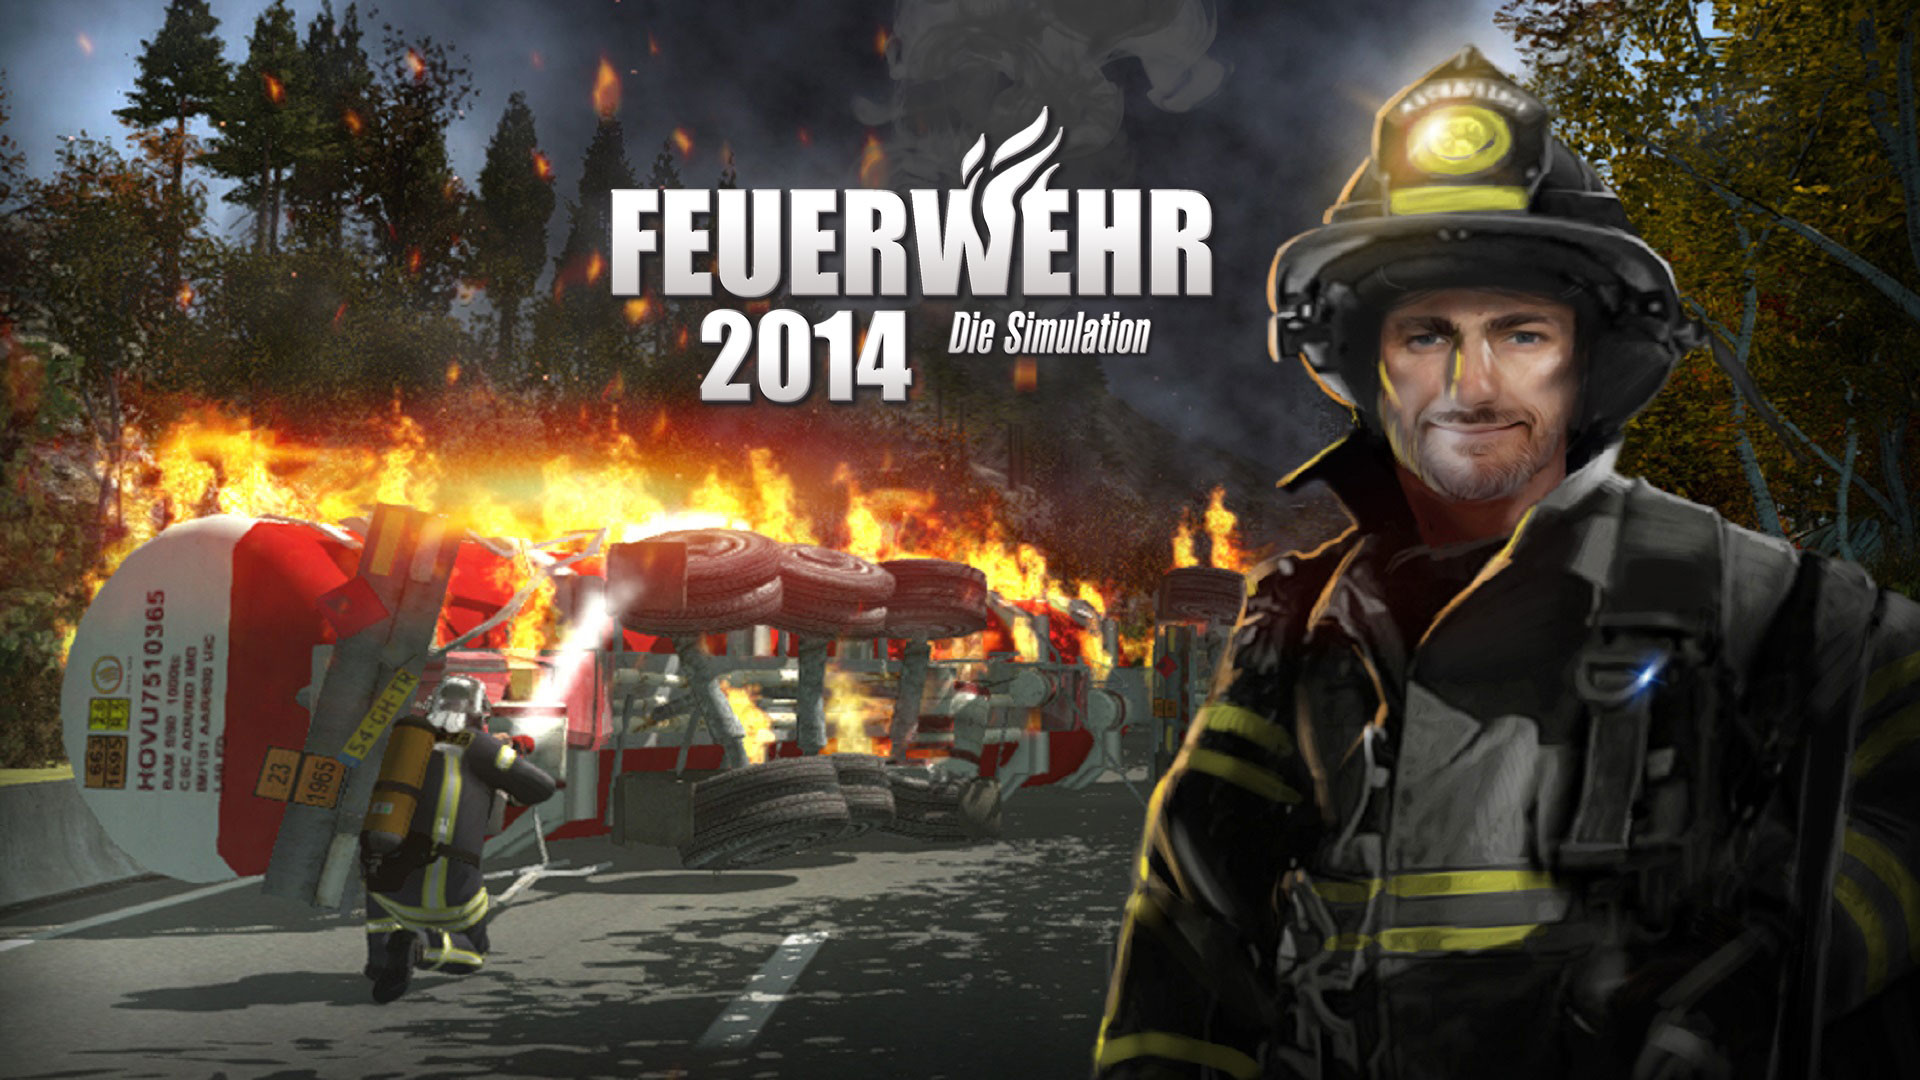 1920x1080 Firefighter Wallpaper for Firefighter Wallpaper Hd. Feuerwehr 2014: Die  Simulation | Simulator PC Spiel .